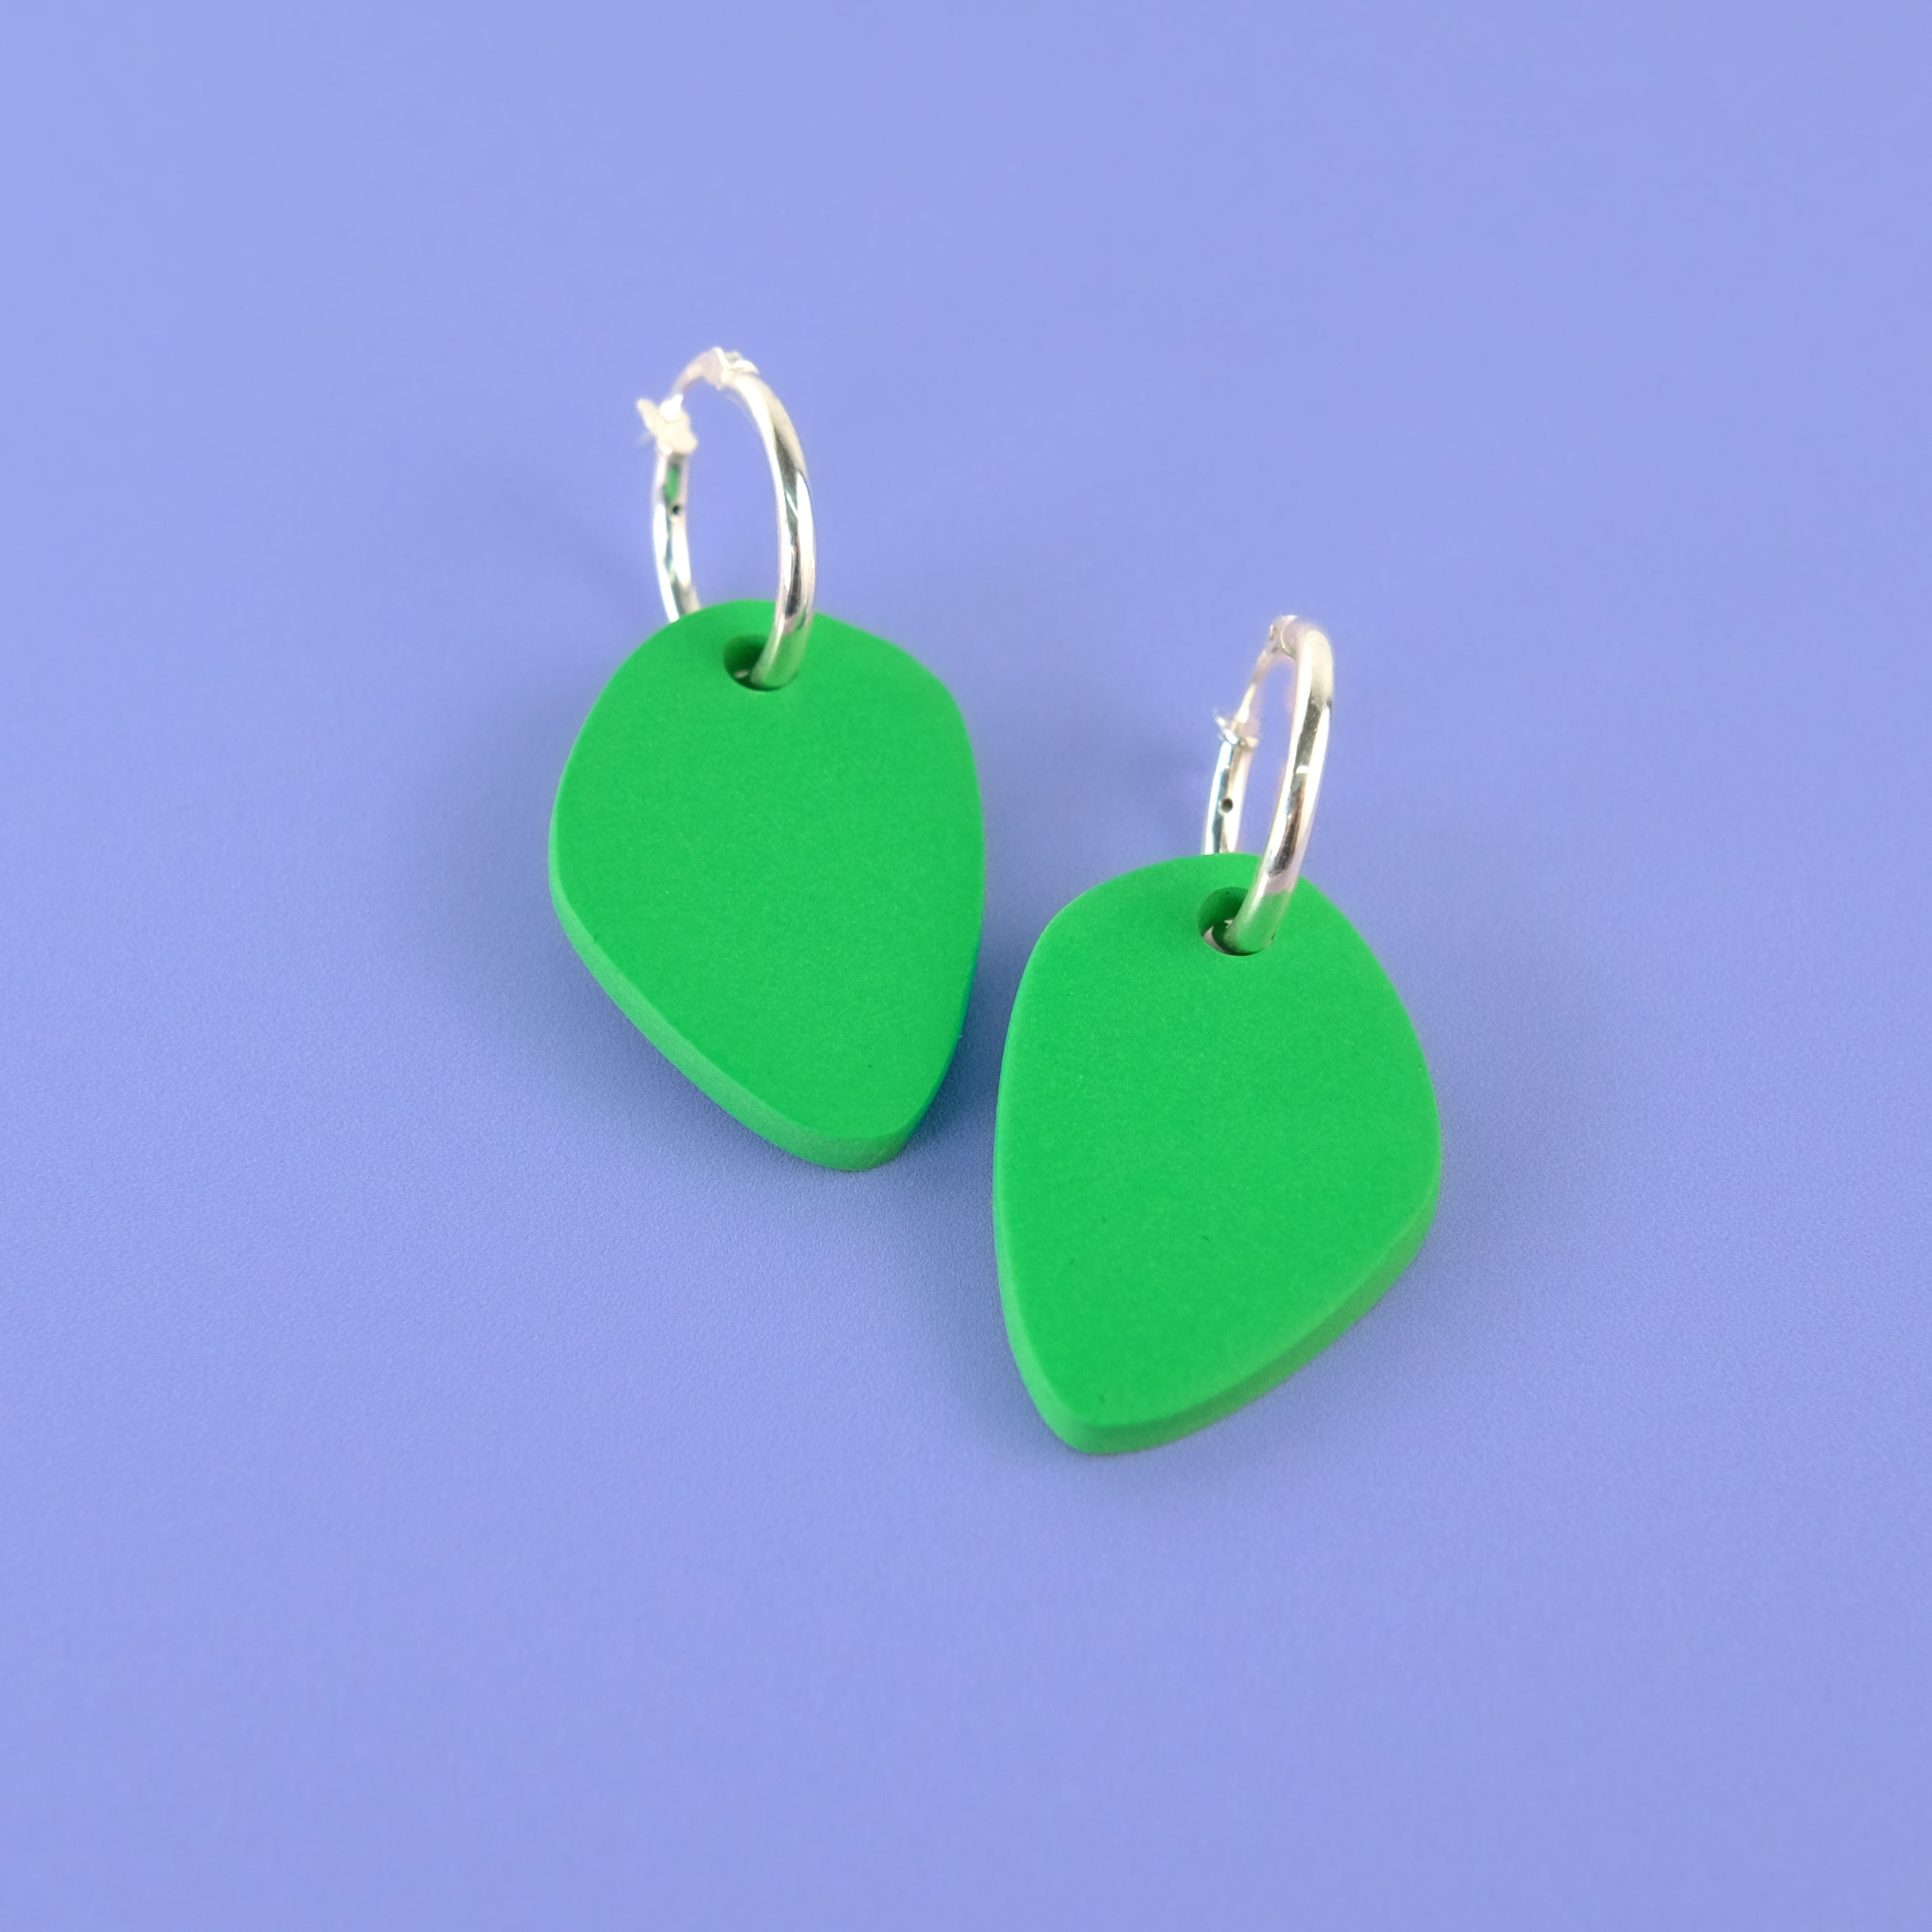 Organic shapes, artistic inspired, lightweight, dangly Calder inspired hoop earrings Calder #color_green